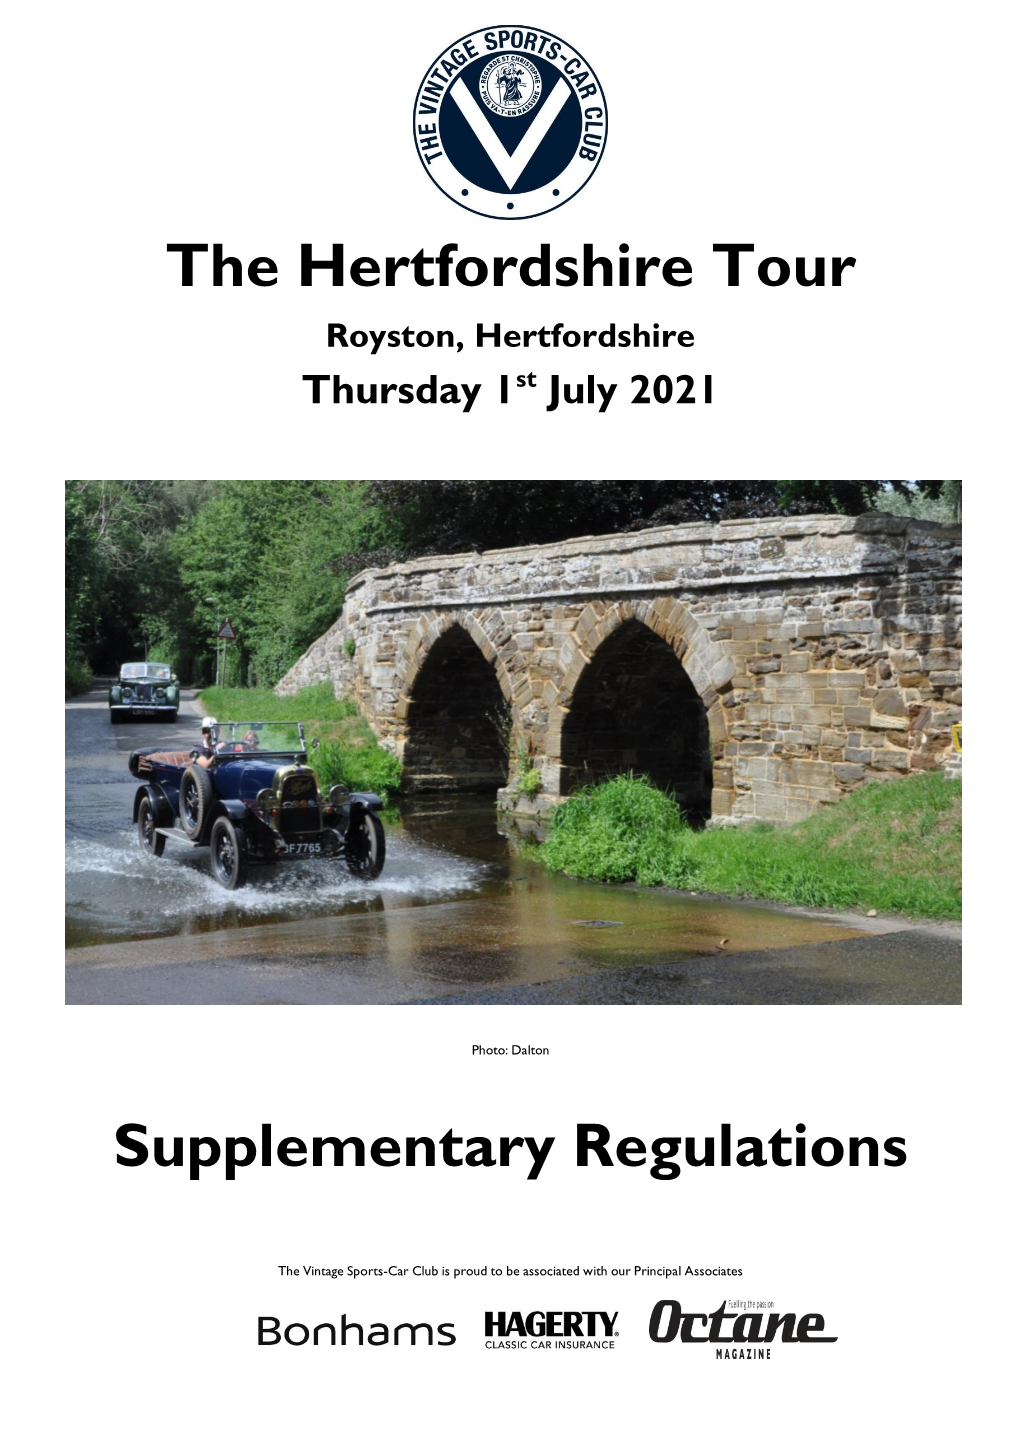 The Hertfordshire Tour Supplementary Regulations